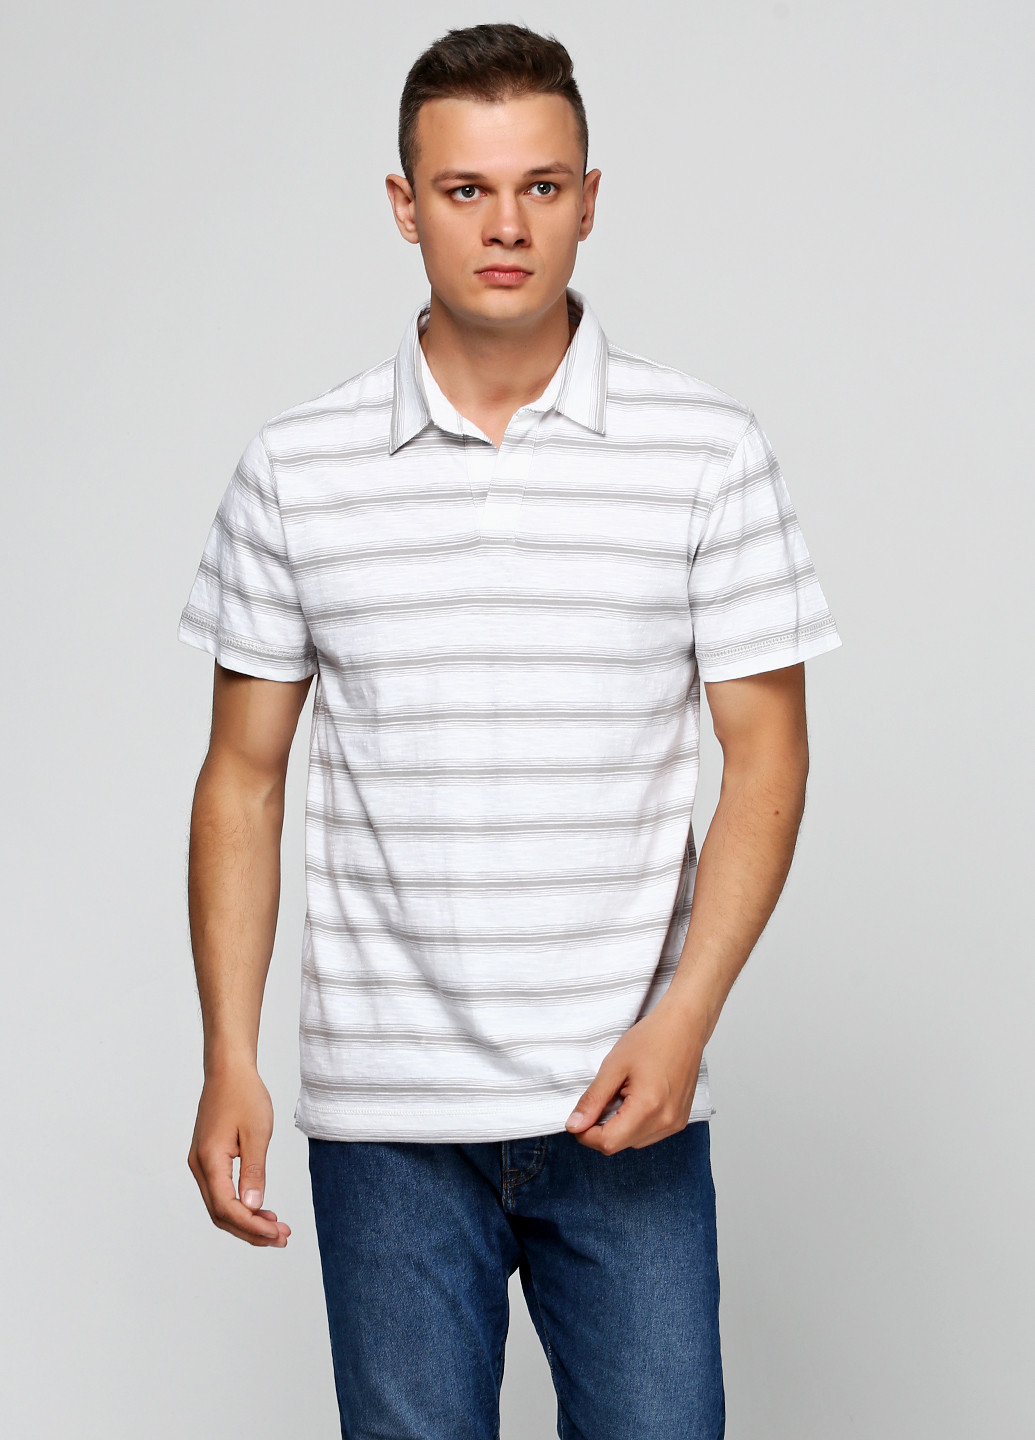 Белая футболка-поло для мужчин Calvin Klein в полоску